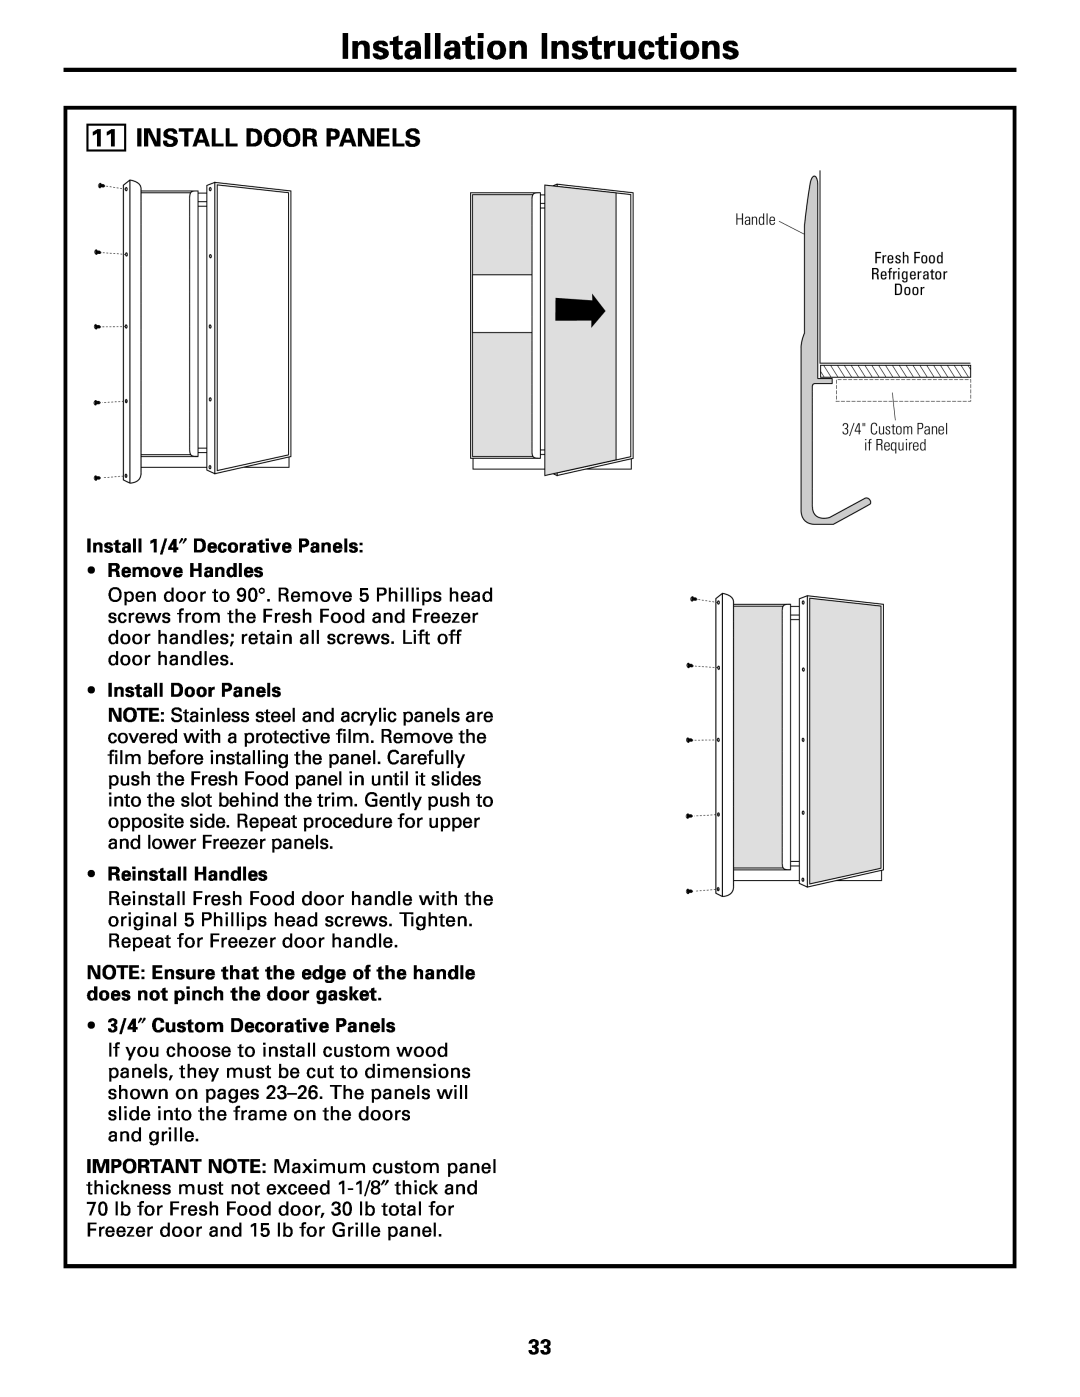 GE 48, 42 Install Door Panels, Installation Instructions, Install 1/4″ Decorative Panels Remove Handles, Reinstall Handles 